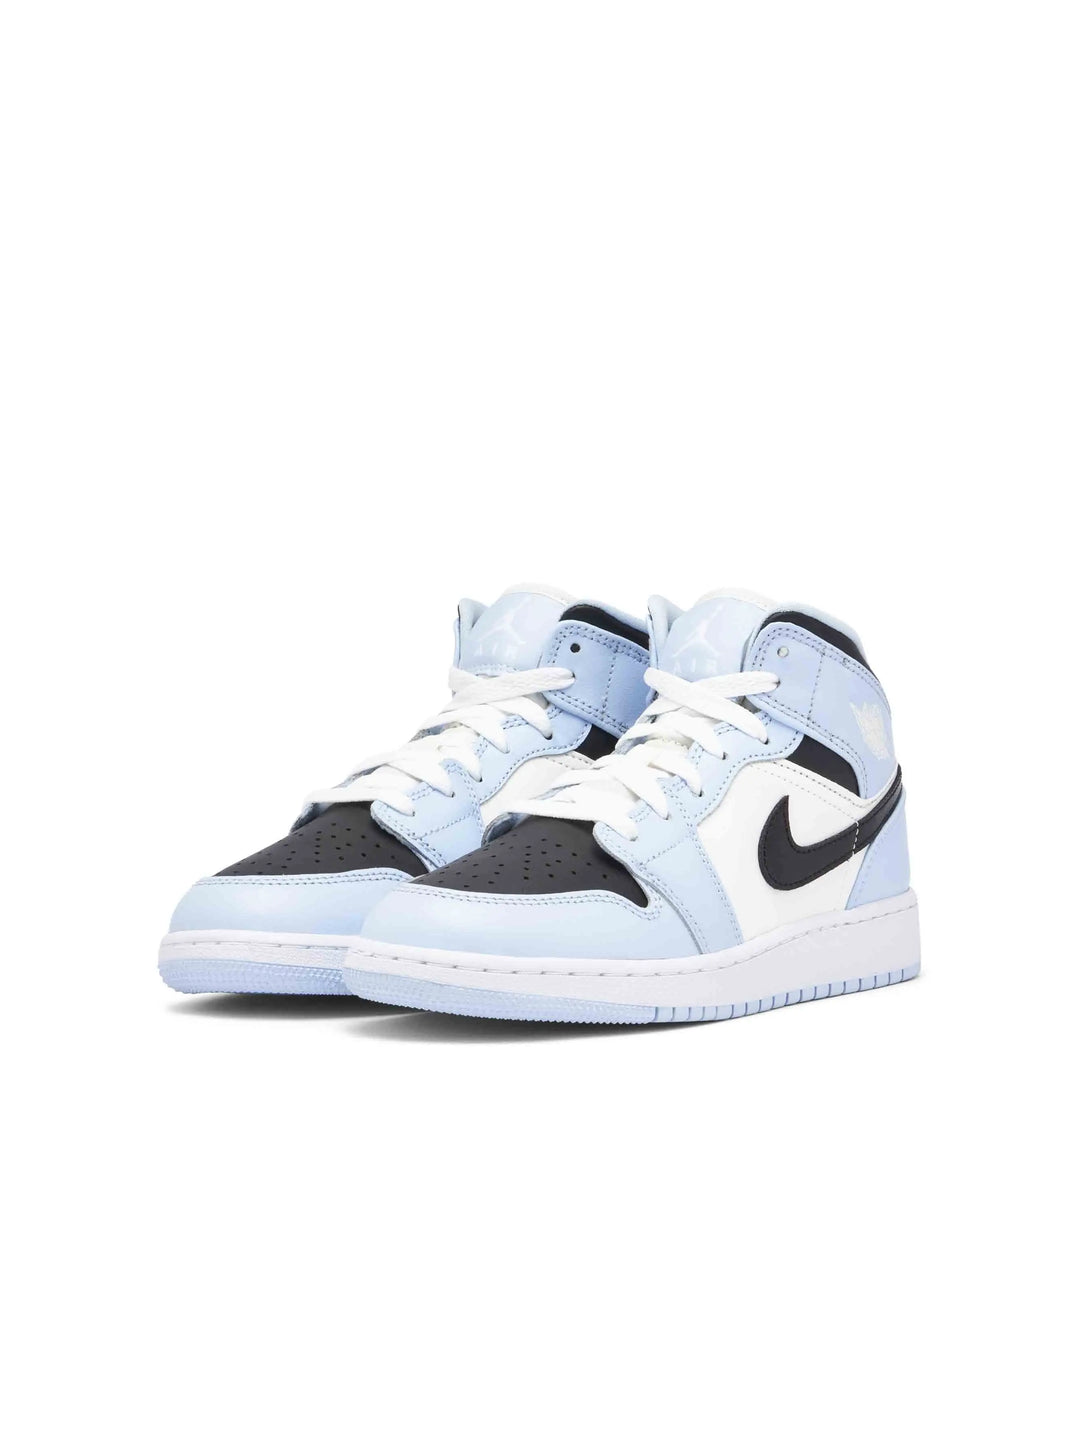 Nike Air Jordan 1 Mid Ice Blue (2022) (GS) - Prior